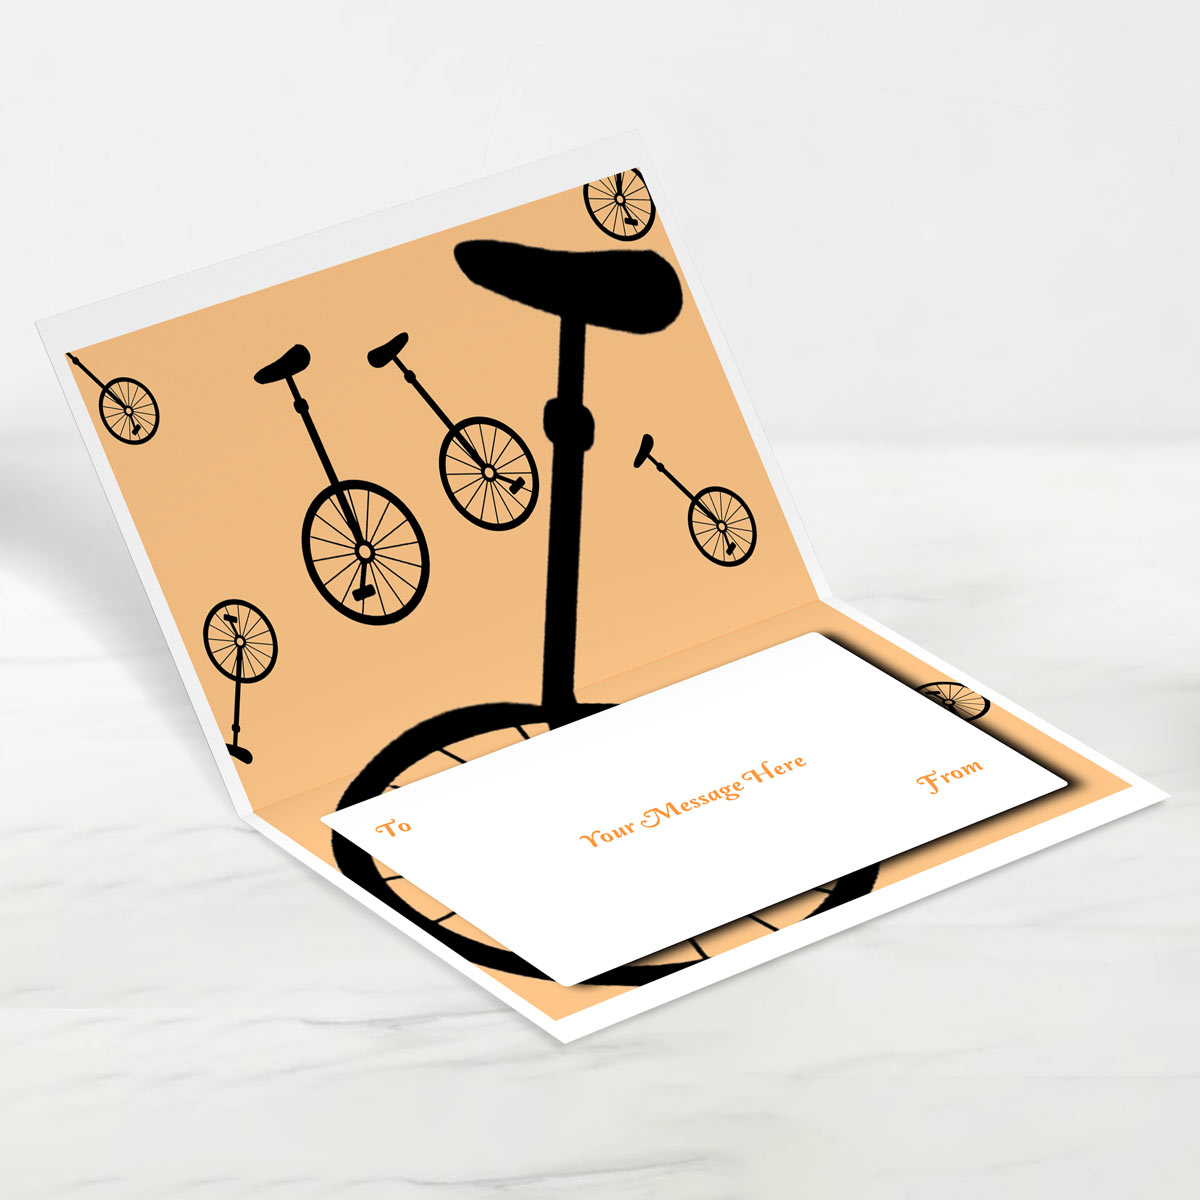 Ride Me Personalised Personalised Greeting Card